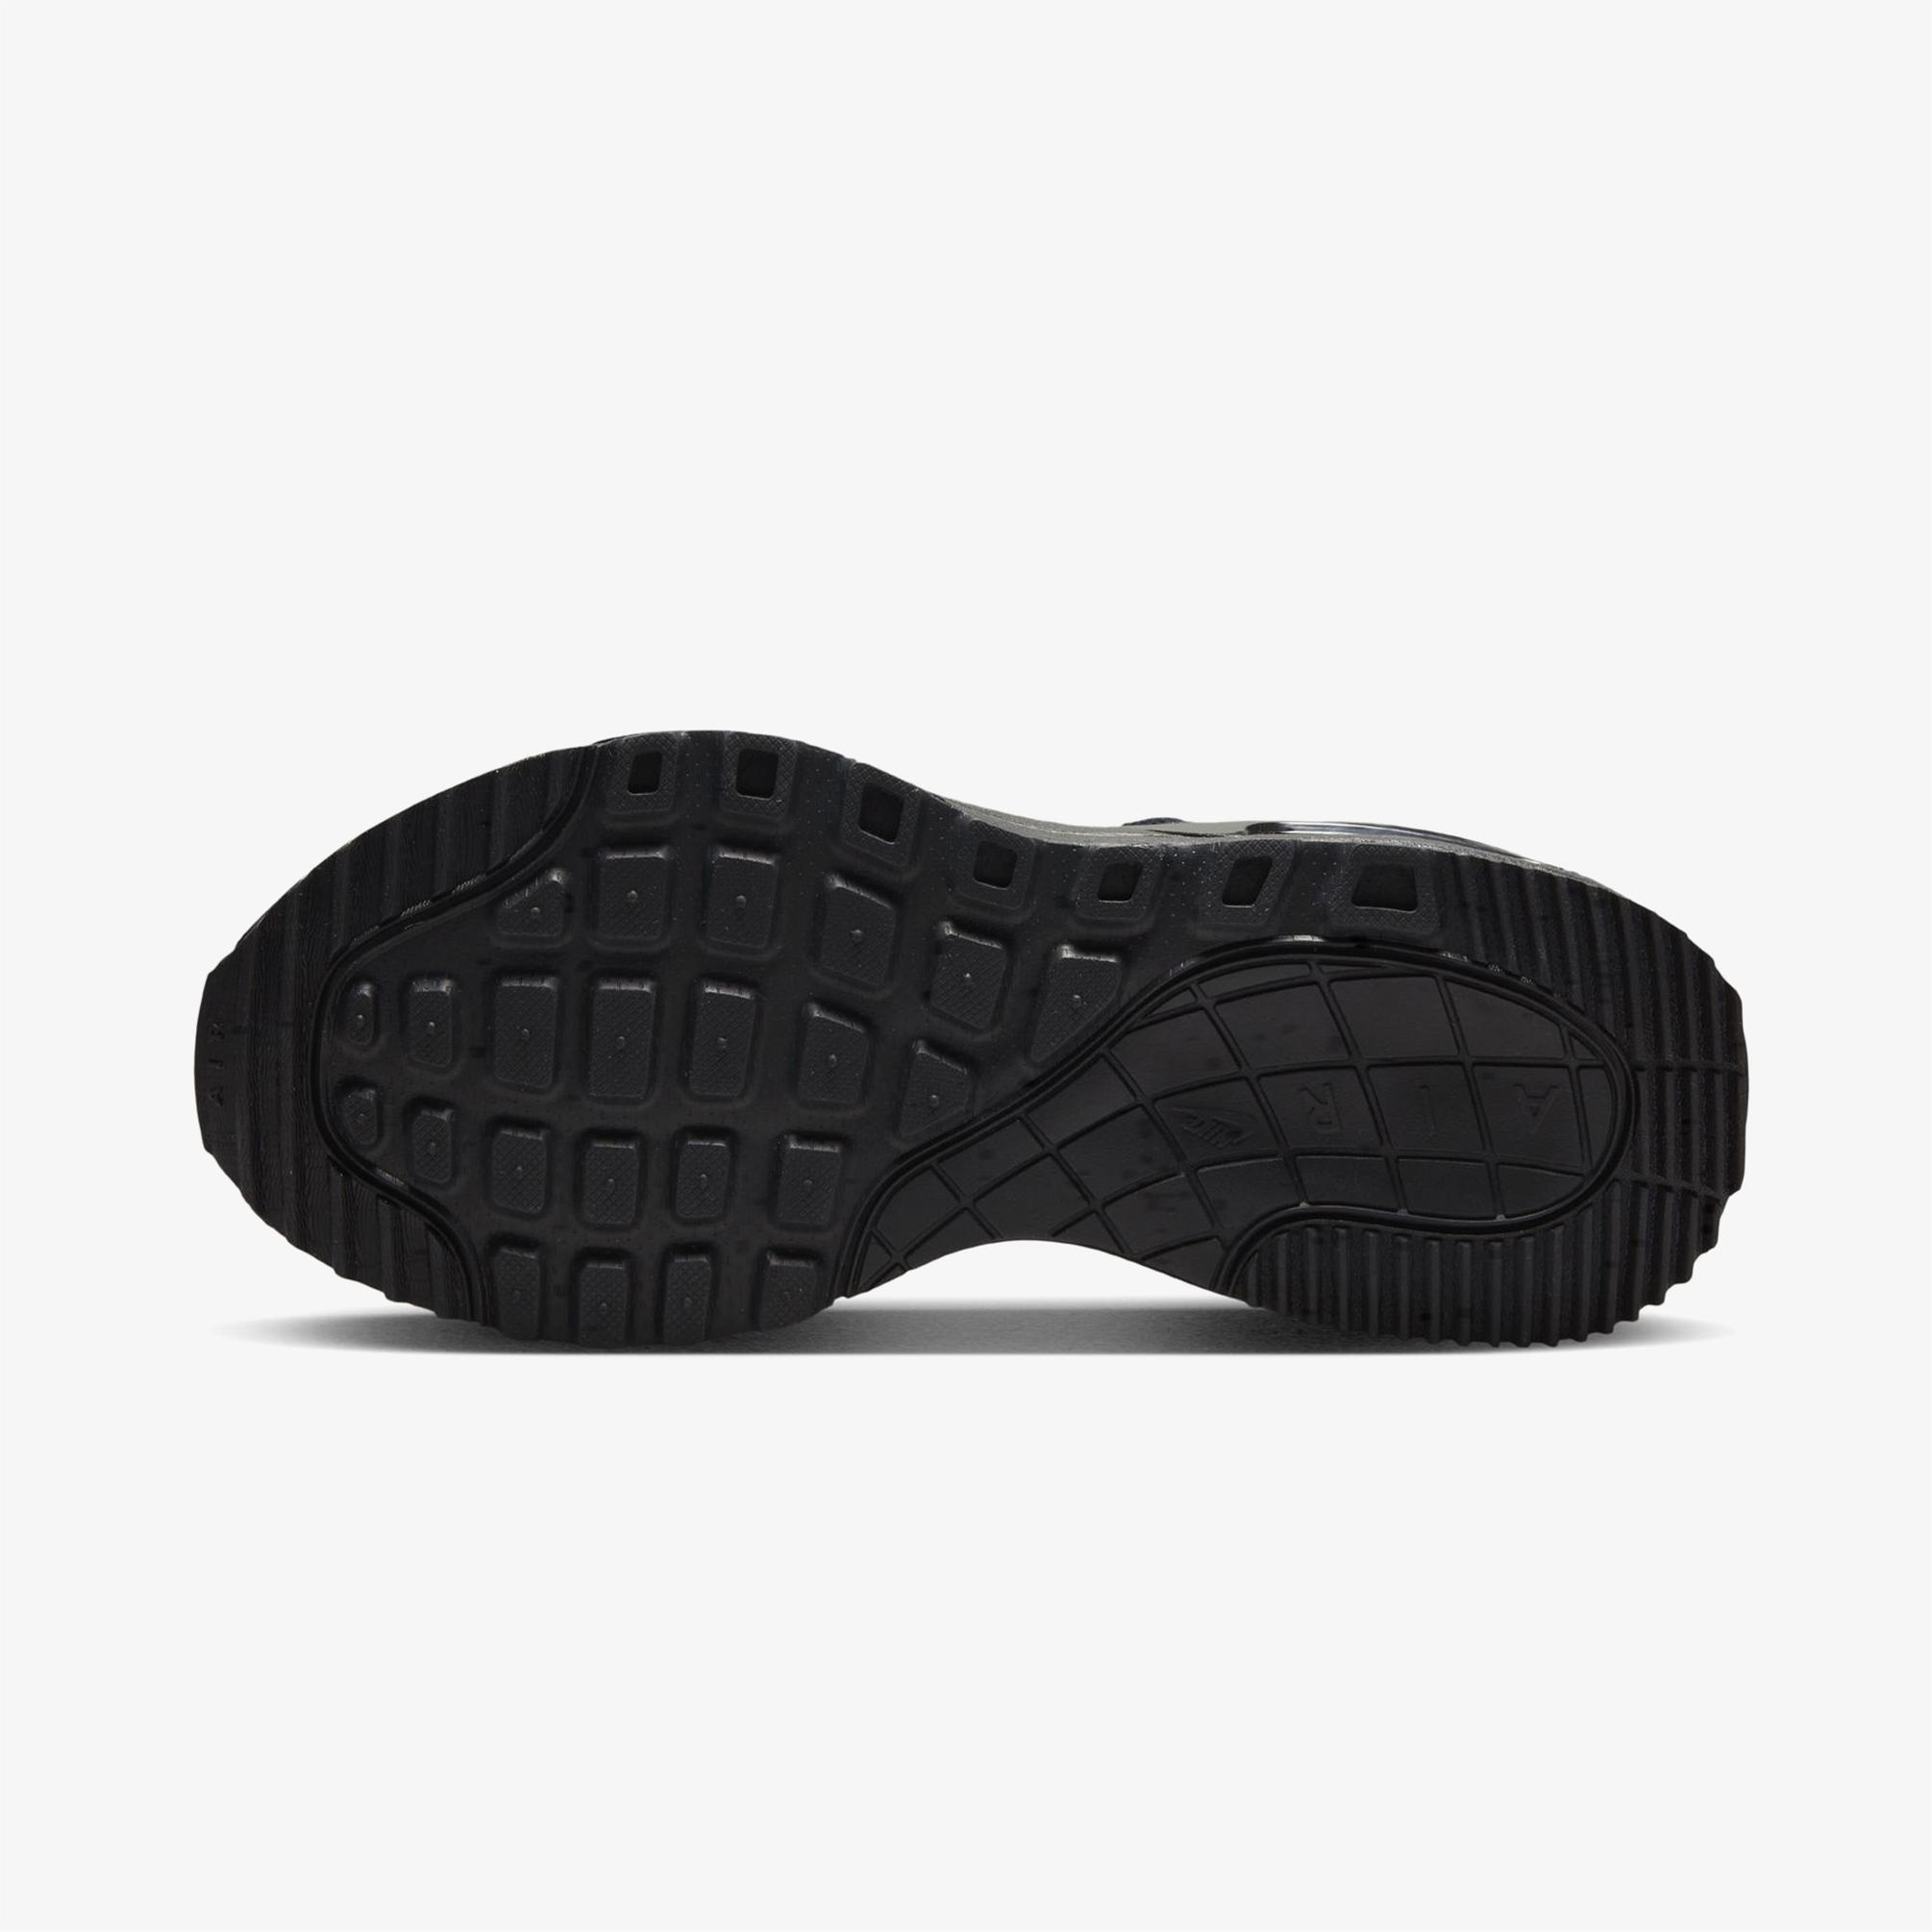  Nike Air Max Systm Kadın Siyah Spor Ayakkabı